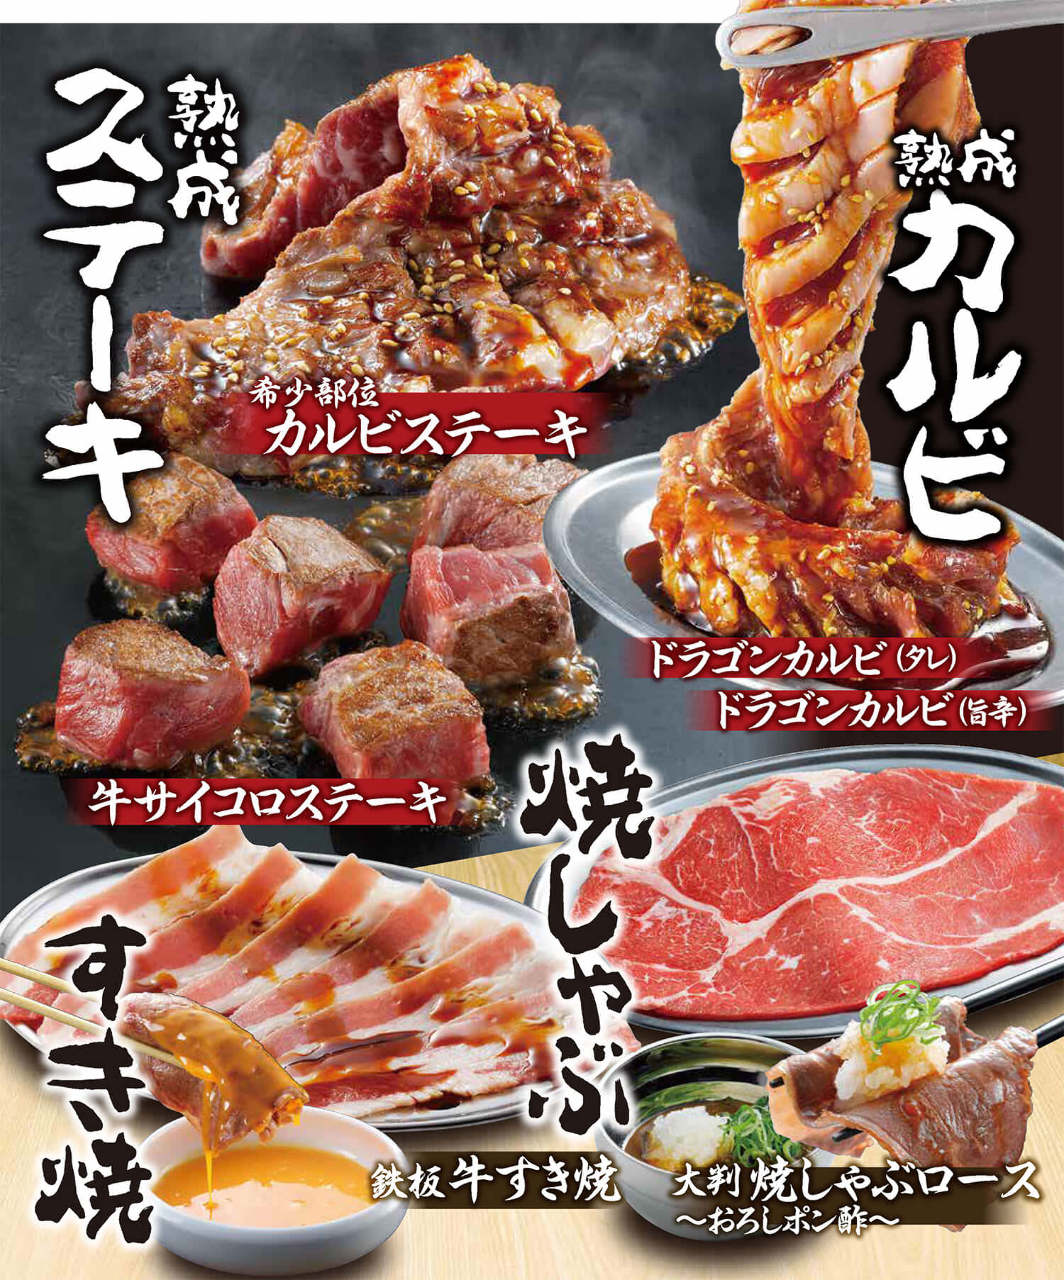 Okonomiyaki Honpo Suzukaten Suzuka Okonomiyaki Gurunavi Restaurant Guide